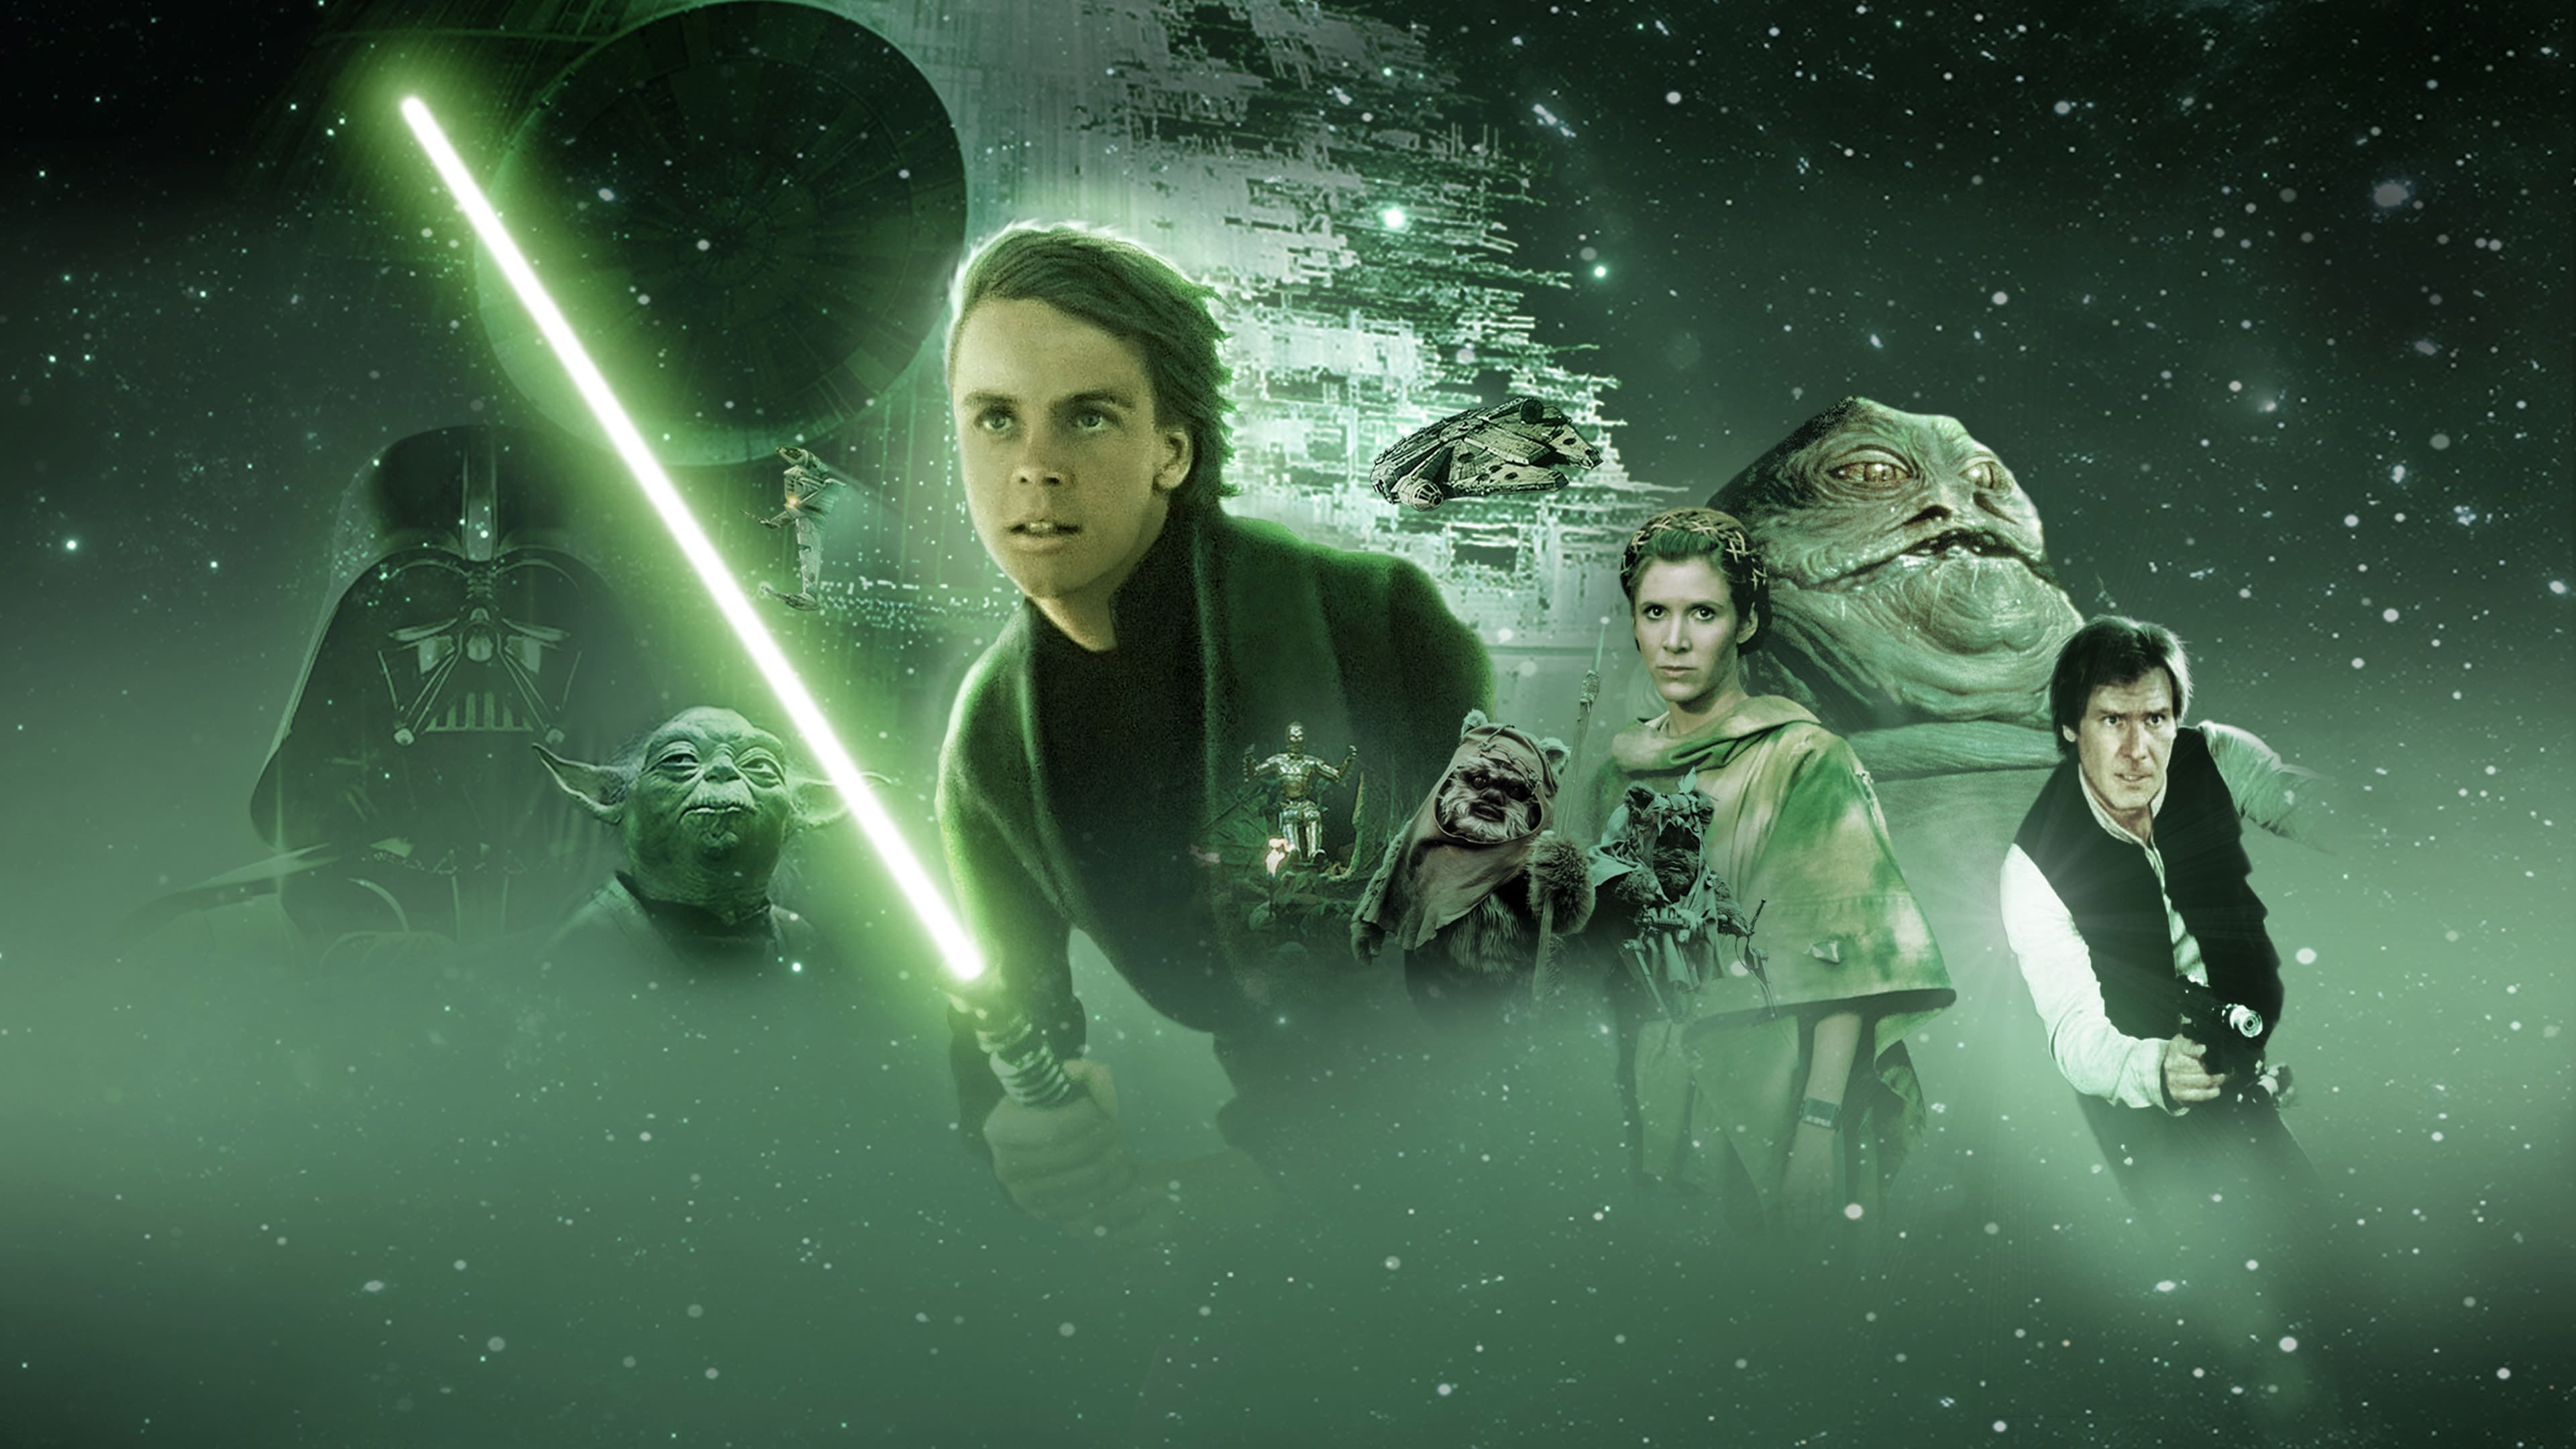 Image du film Star Wars Episode VI : le retour du Jedi b5i3wpa2lkxdmqfnnx9nfxnkffgjpg